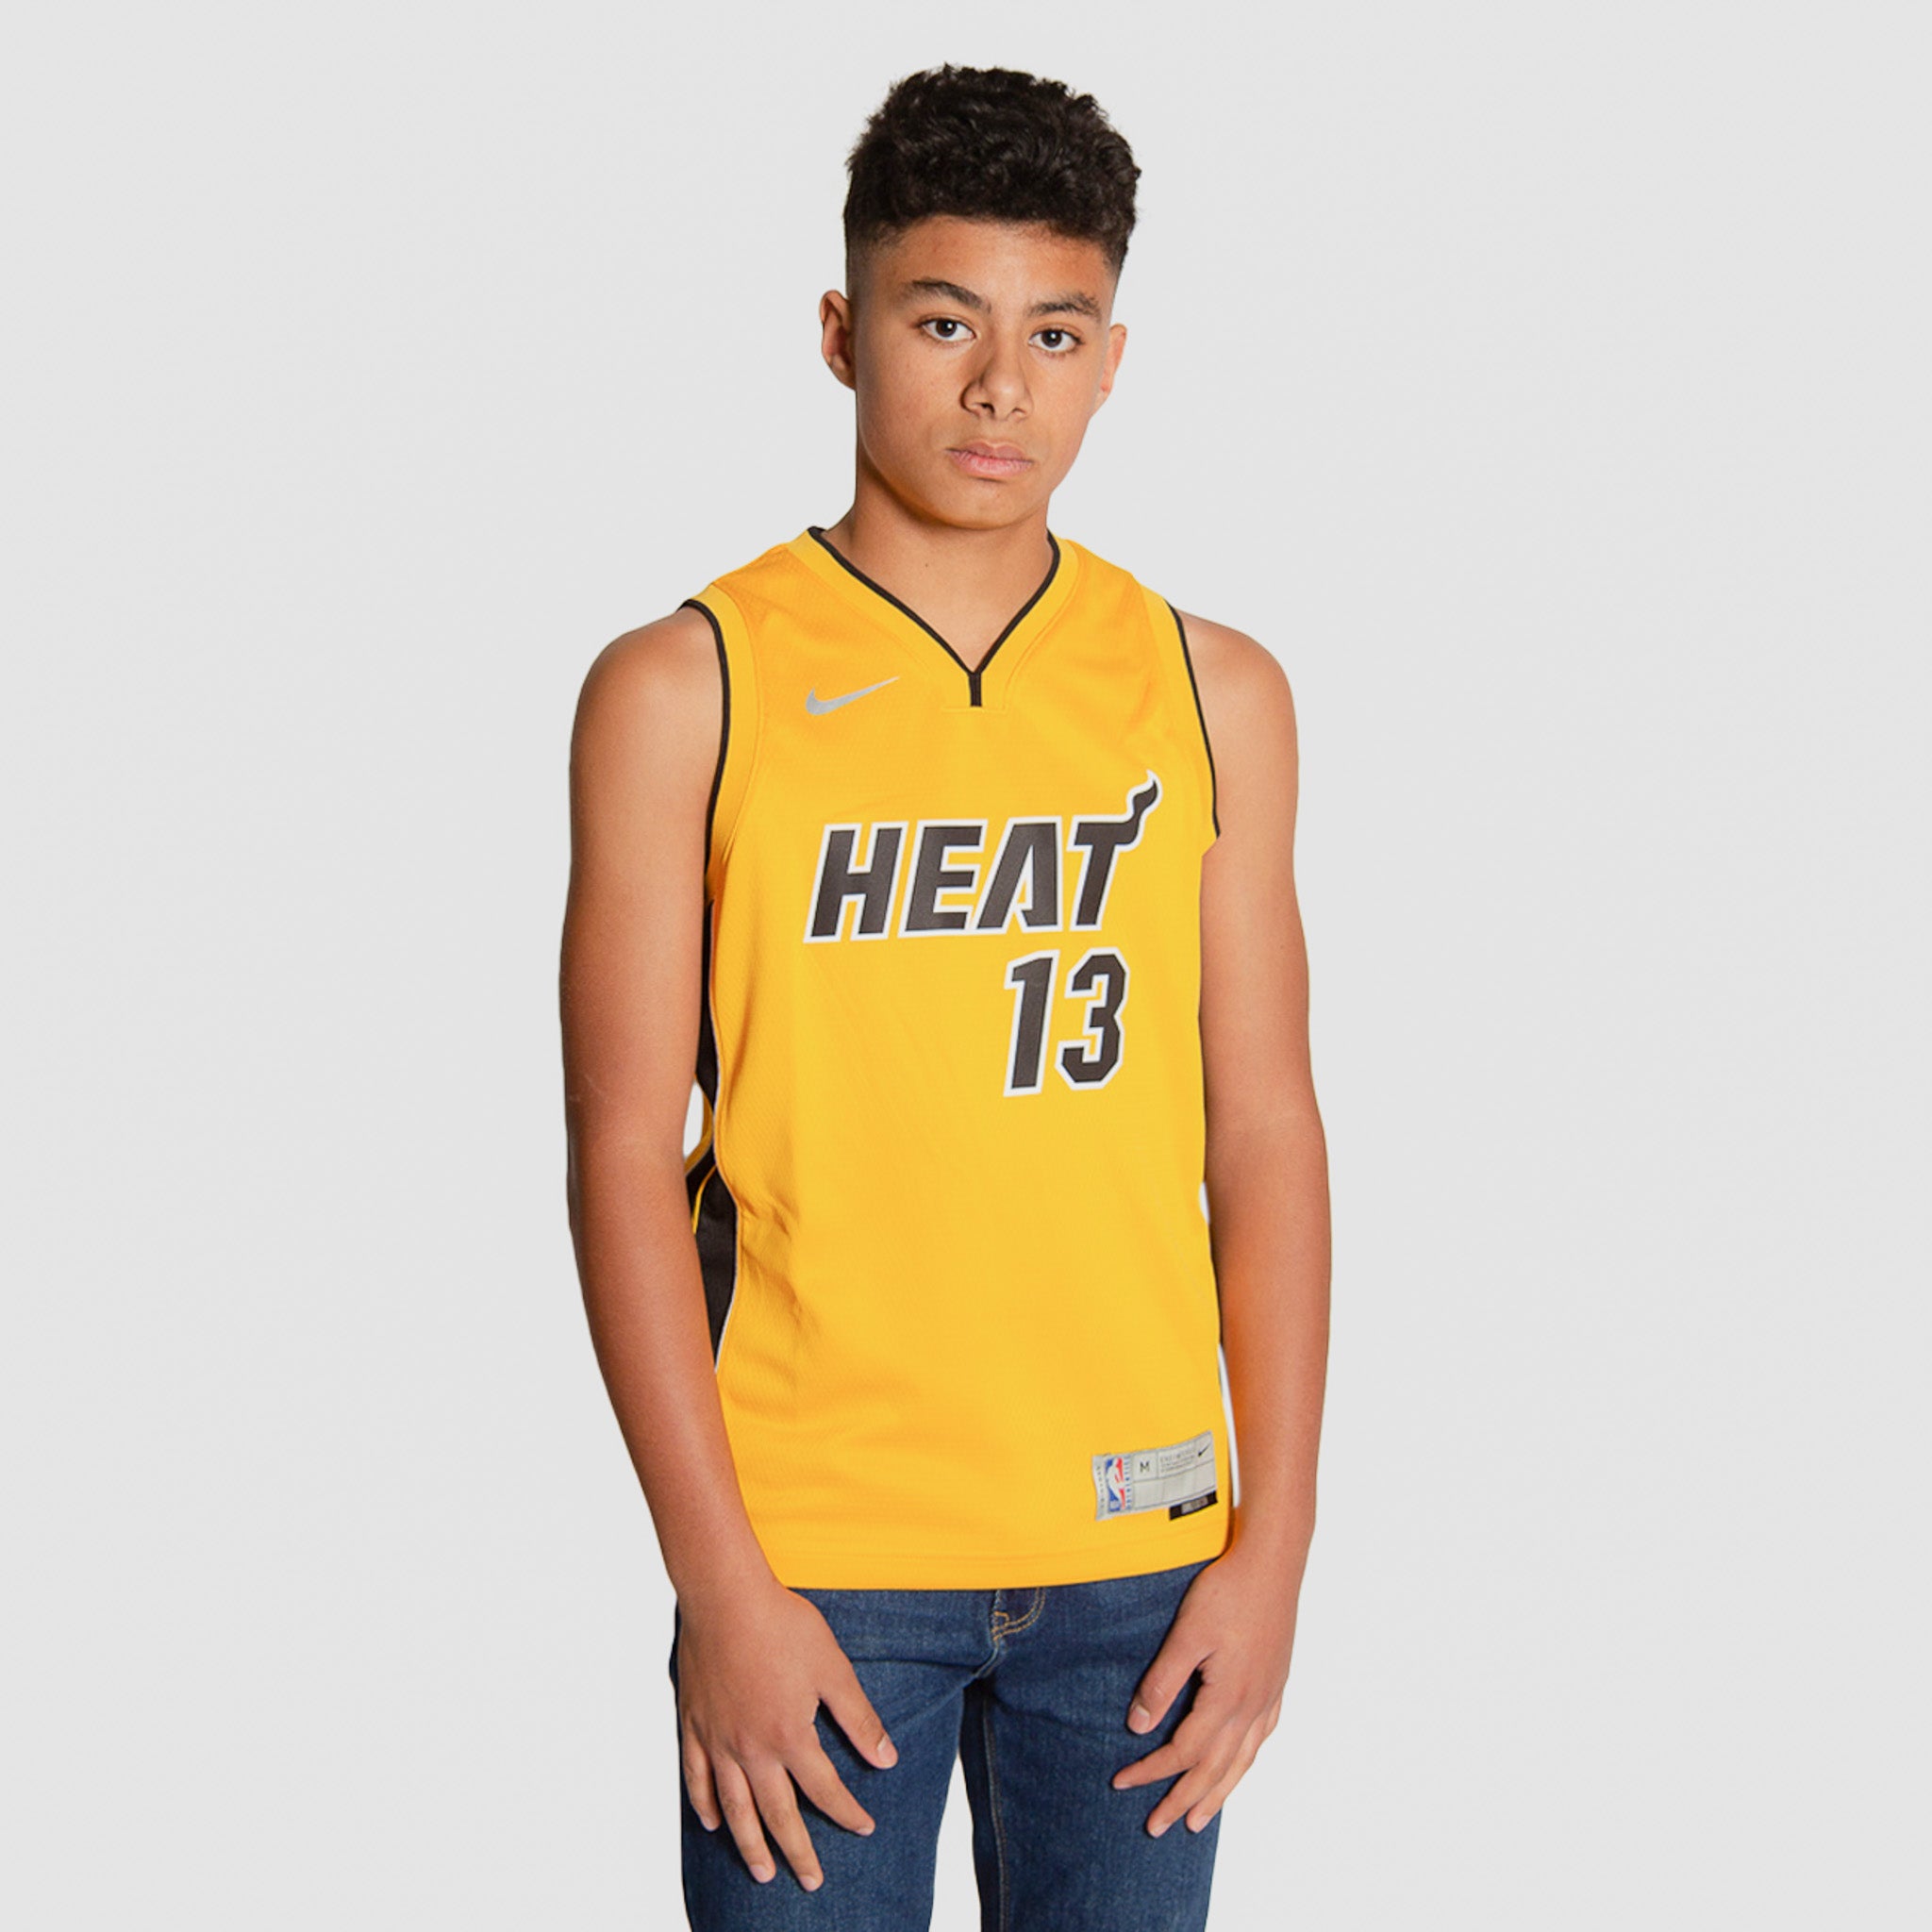 Miami Heat youth sizes jersey